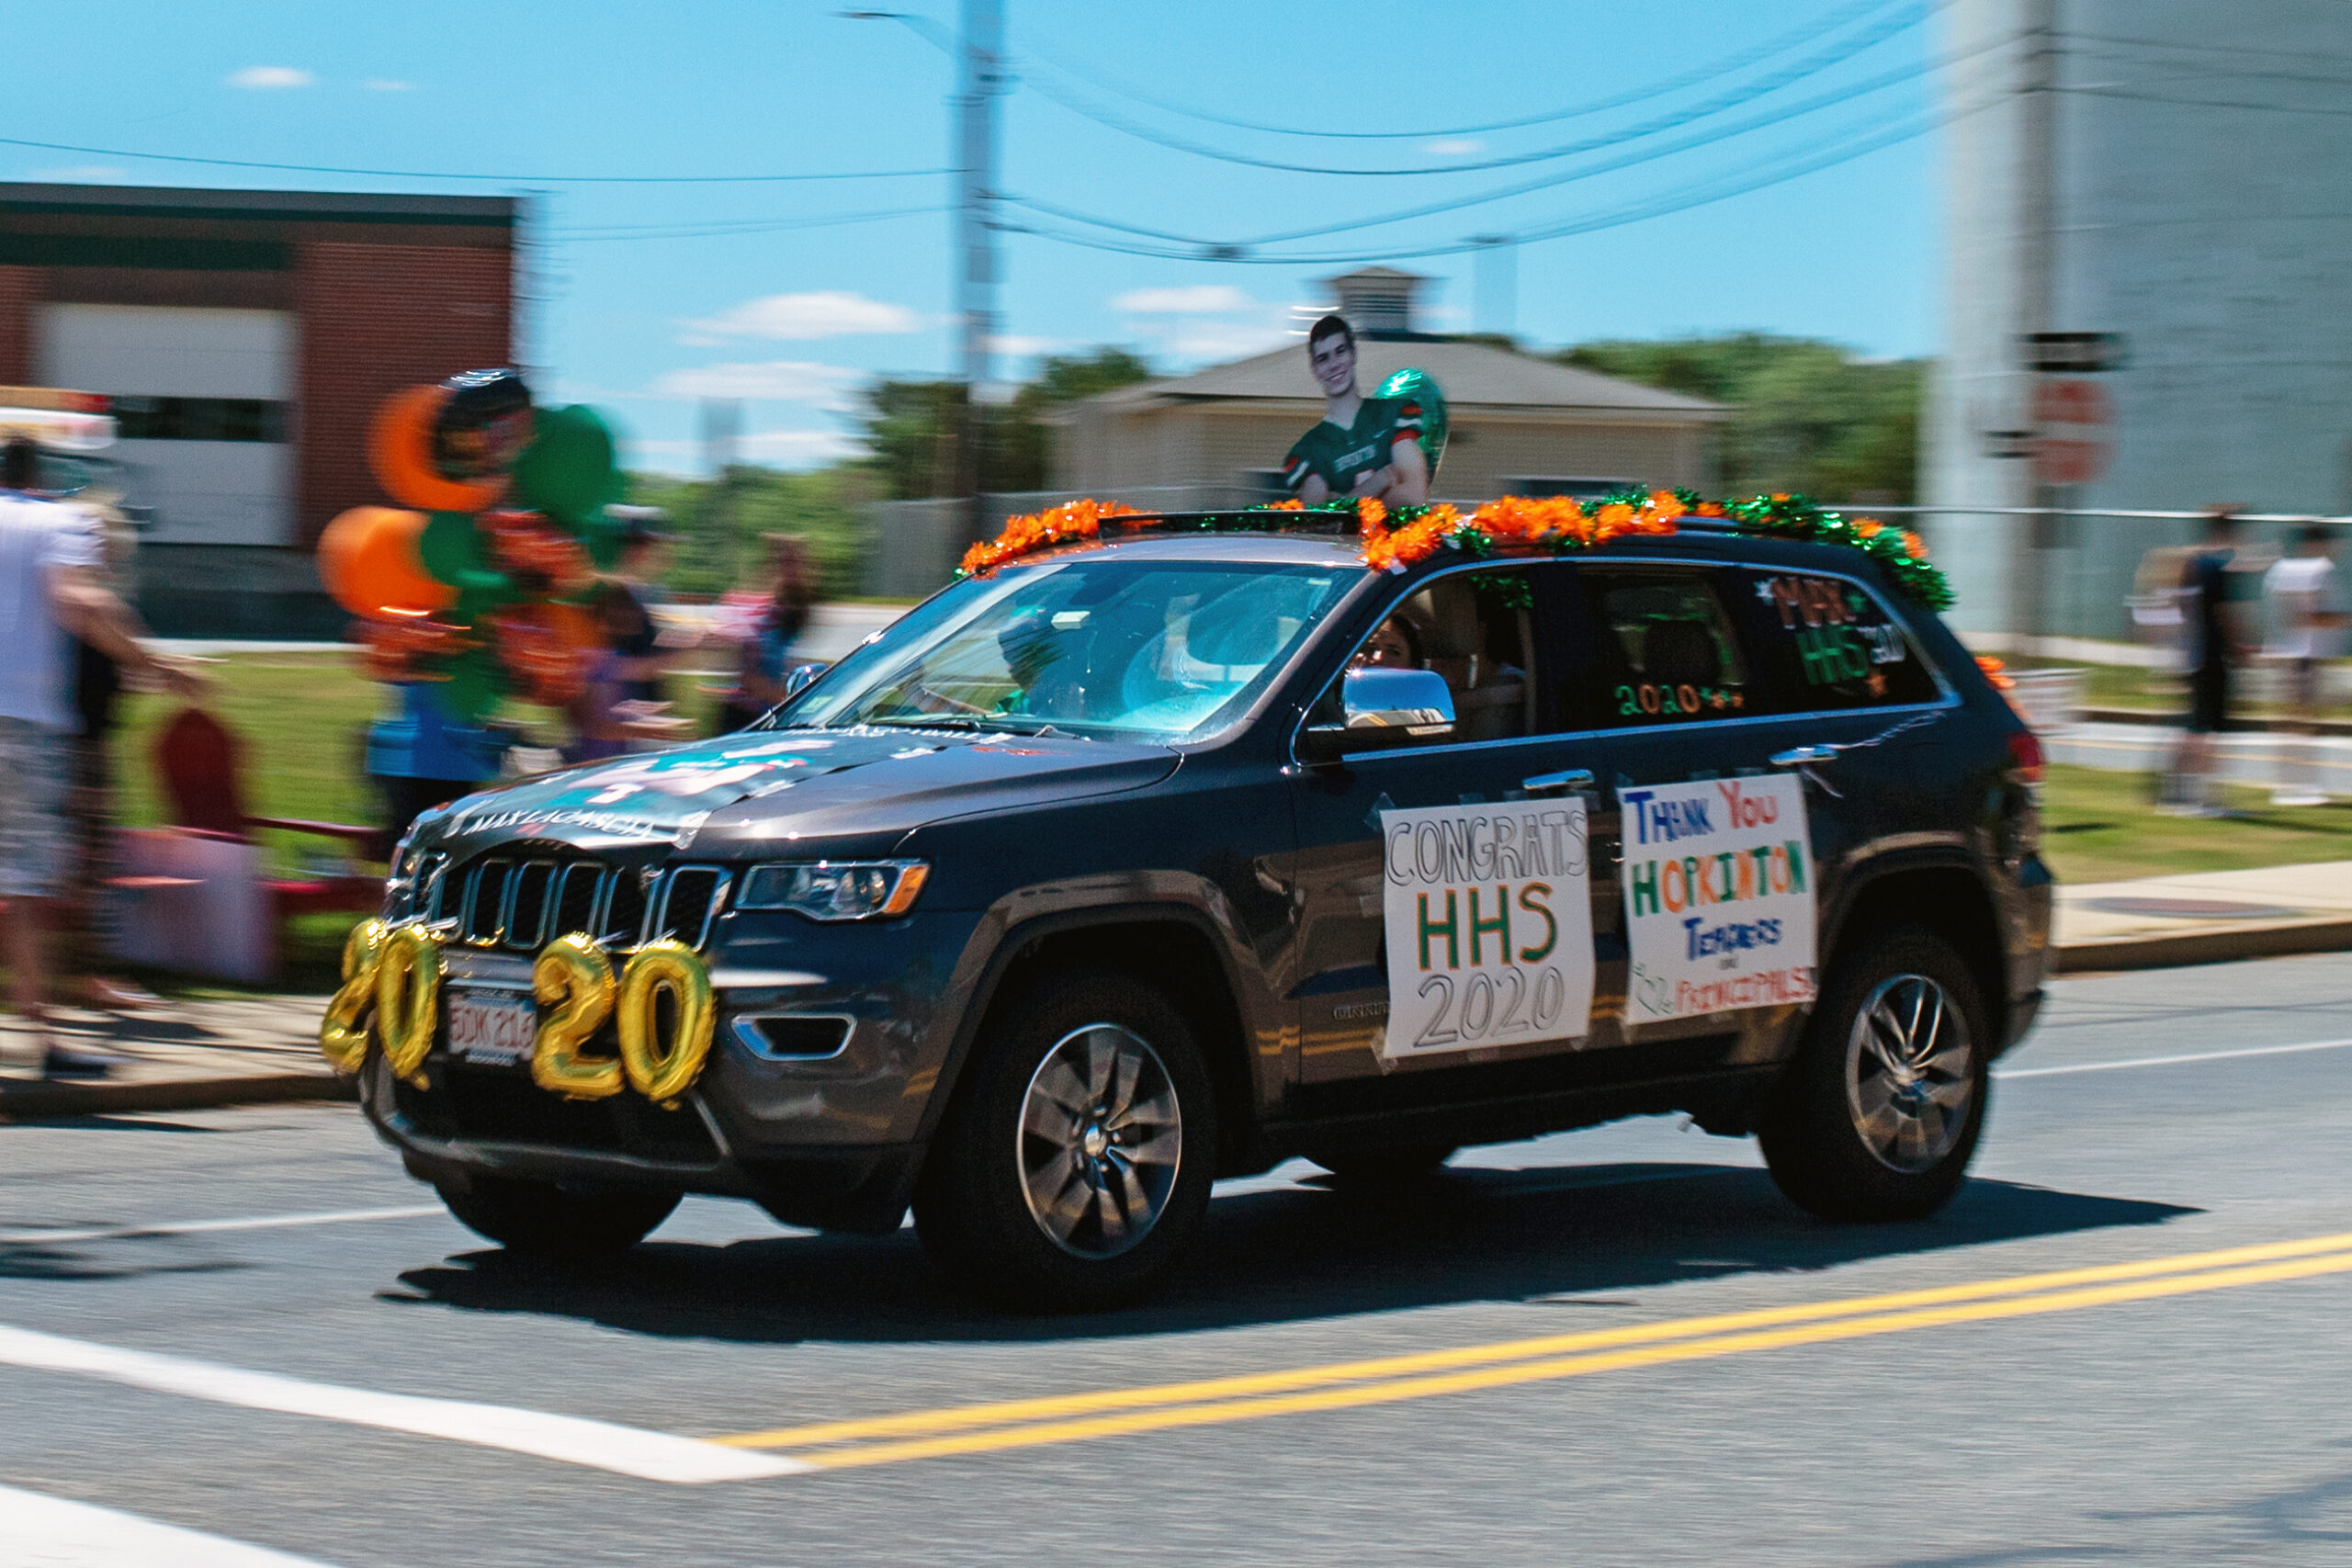 HHS graduation car parade set for June 5